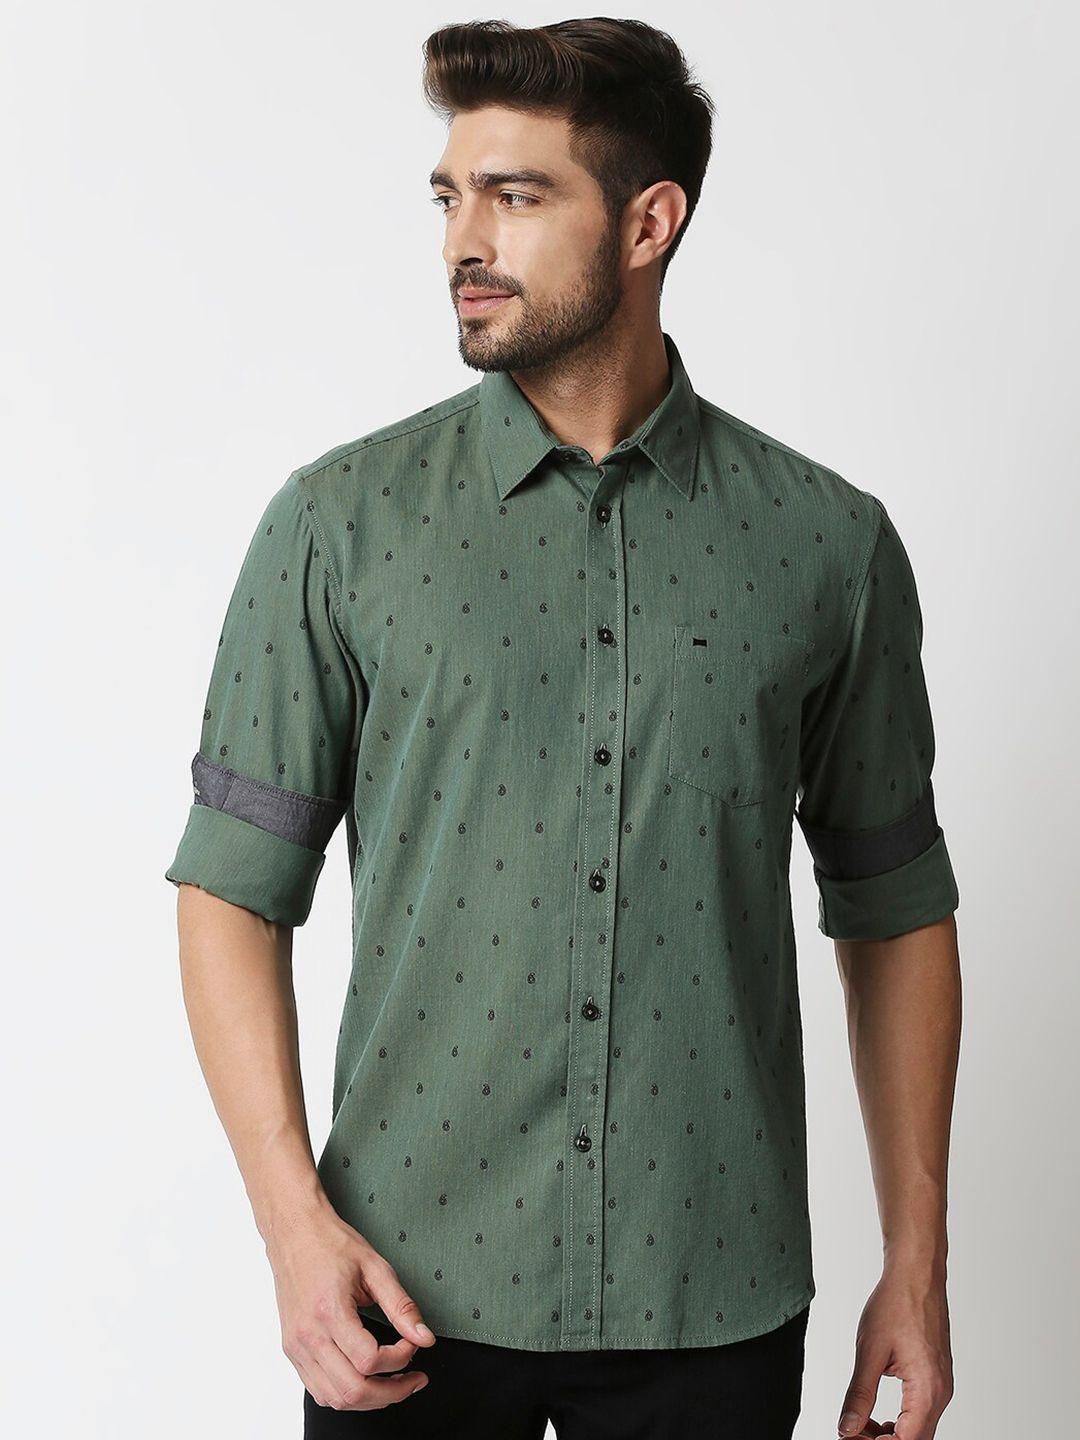 basics men olive green & black slim fit ditsy paisley print cotton casual shirt